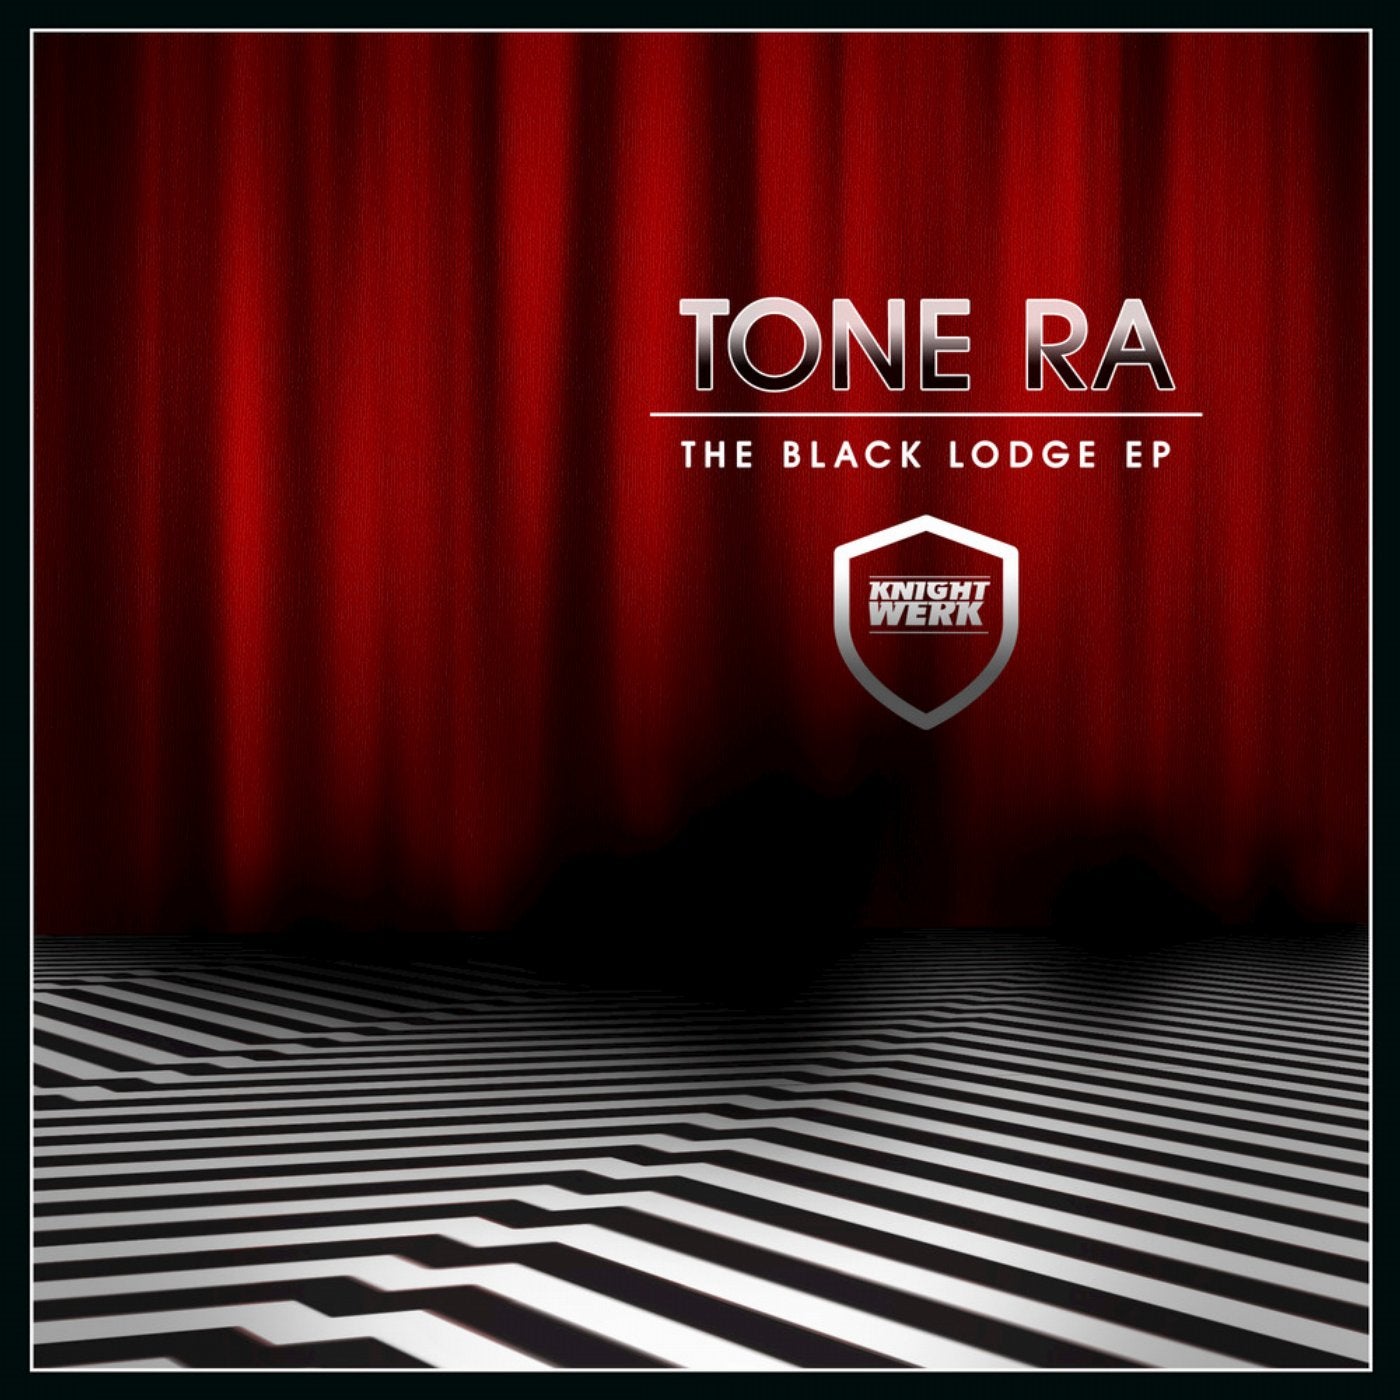 The Black Lodge EP